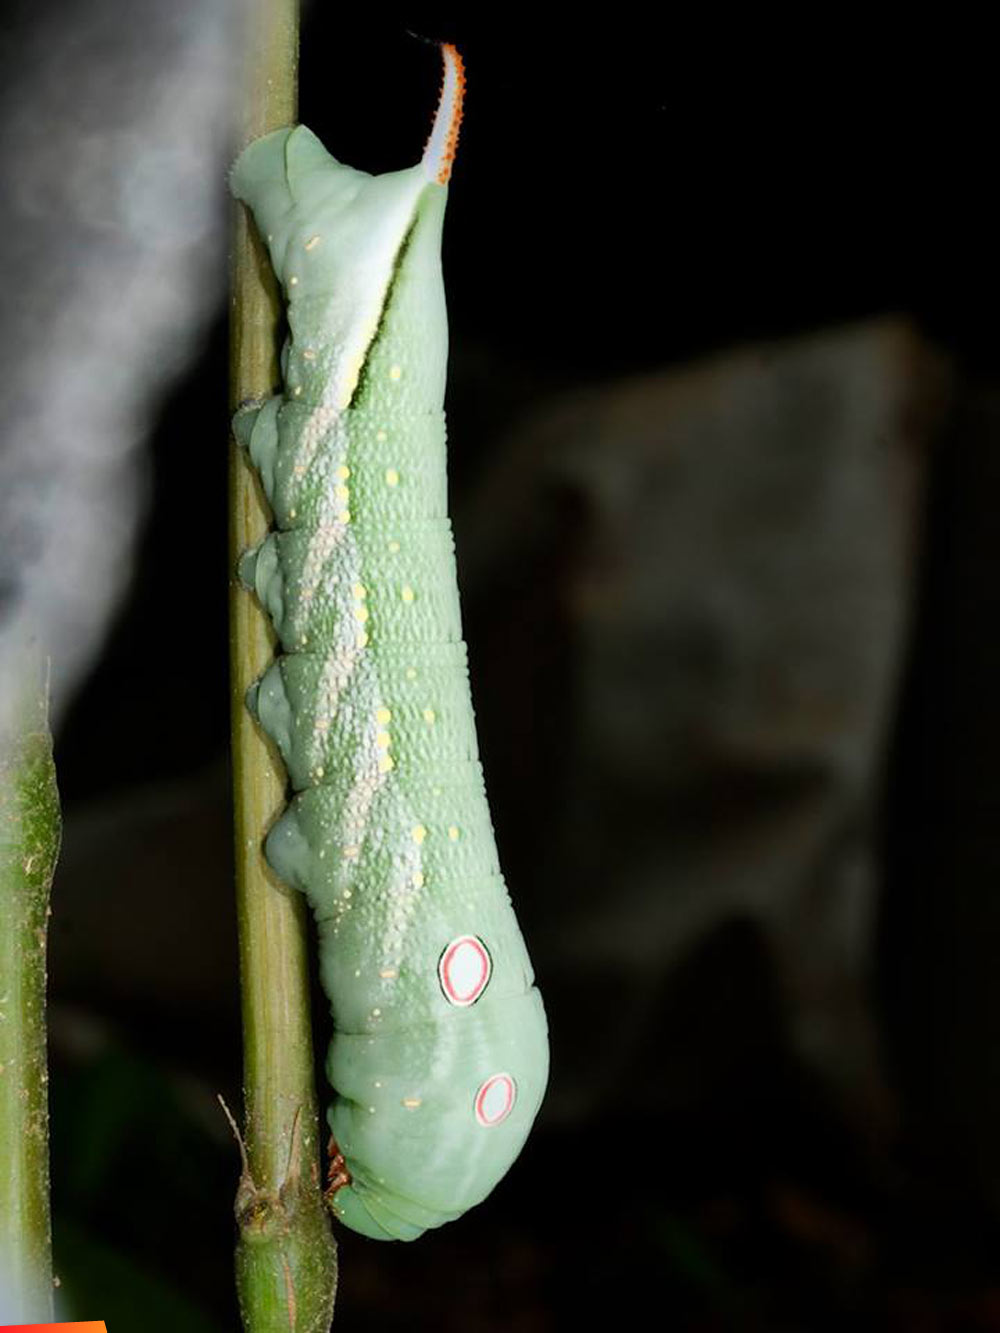 Xylophanes chiron caterpillar